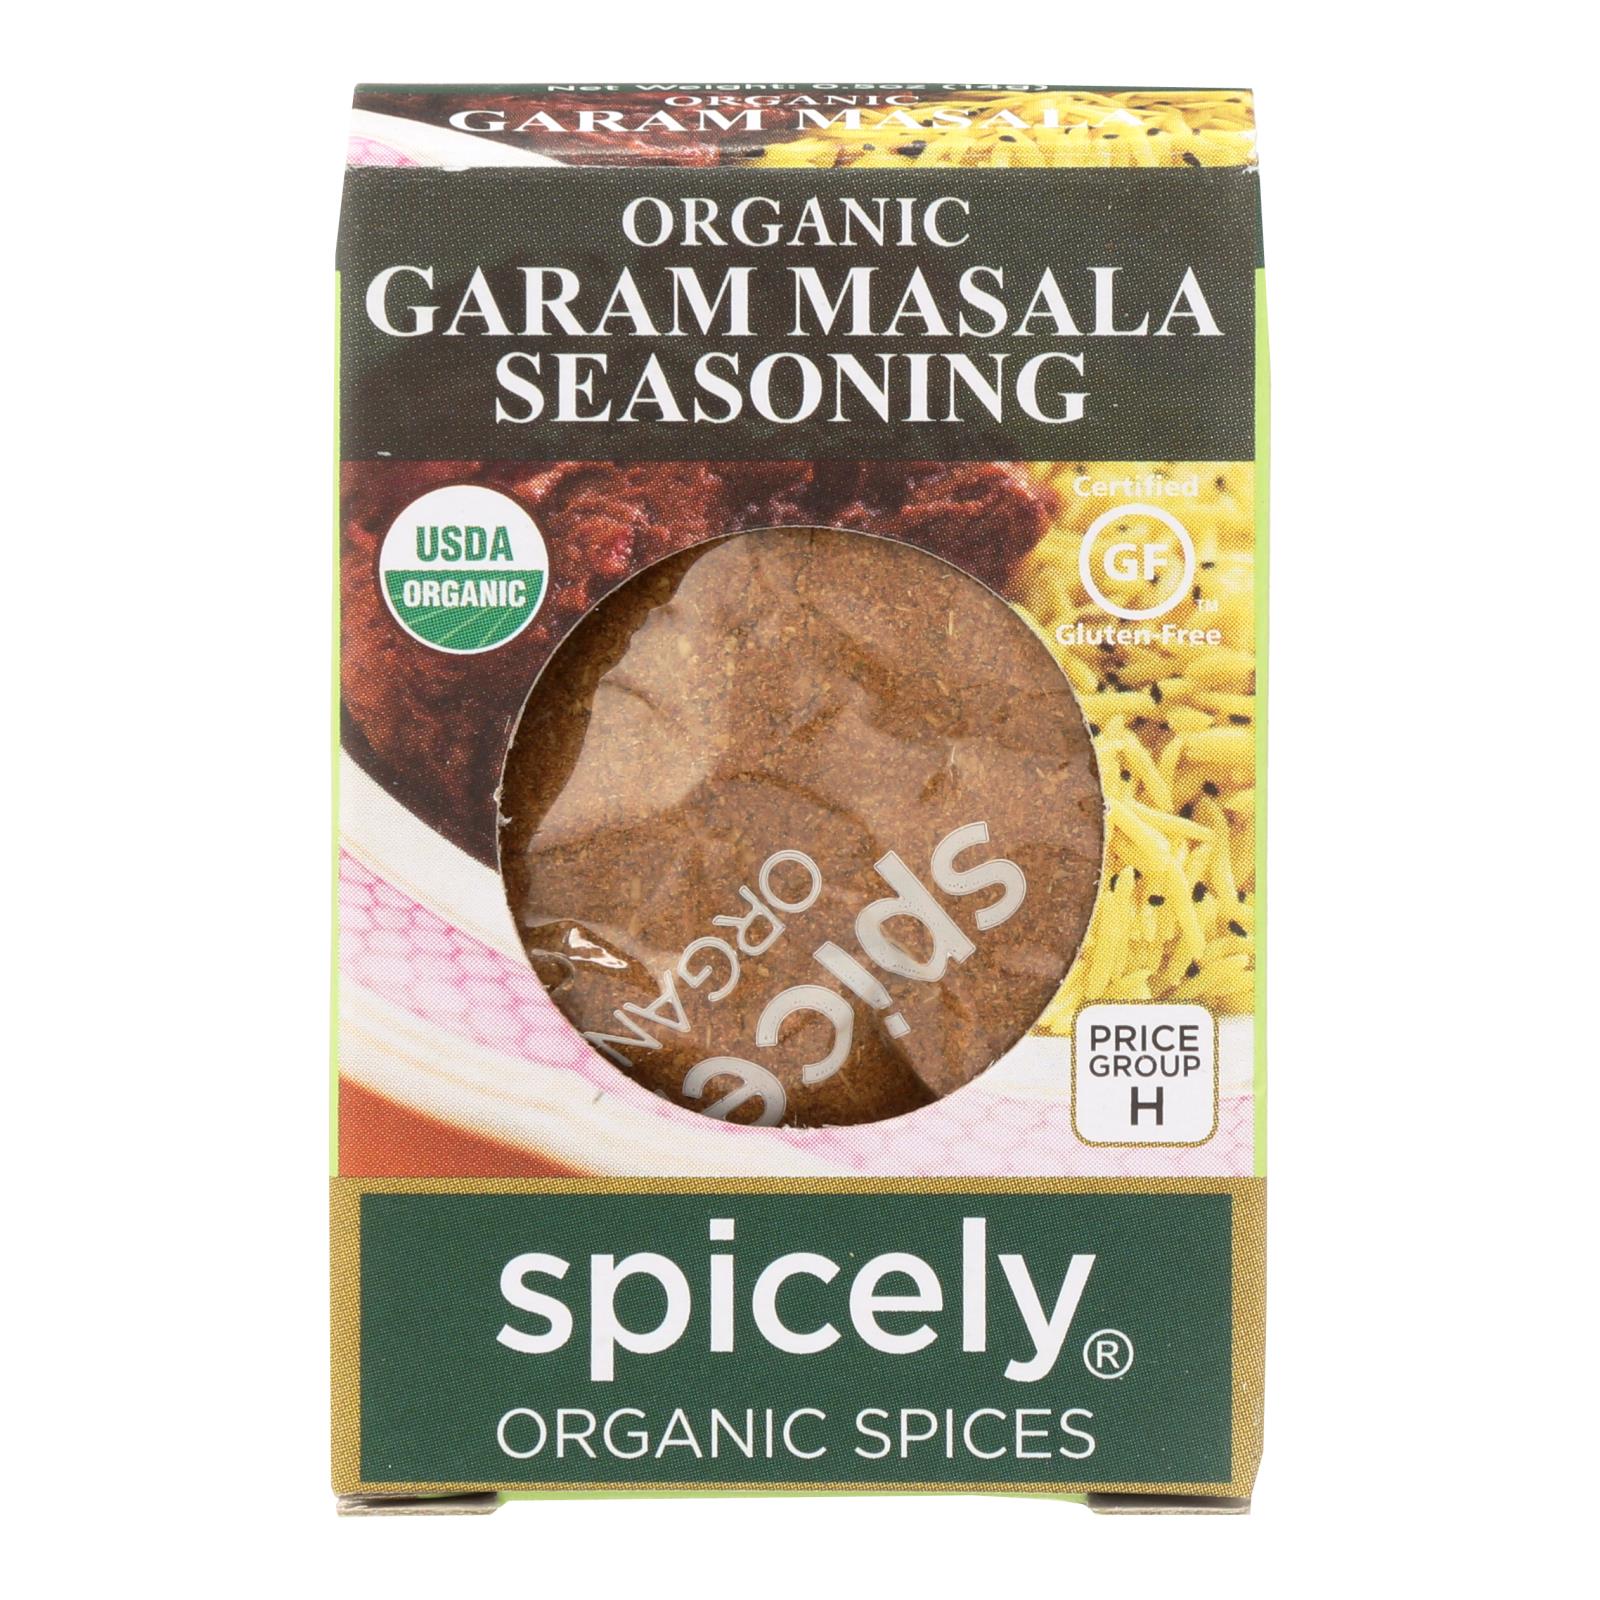 Spicely Organics - Organic Garam Masala Seasoning - 6개 묶음상품 - 0.5 oz.